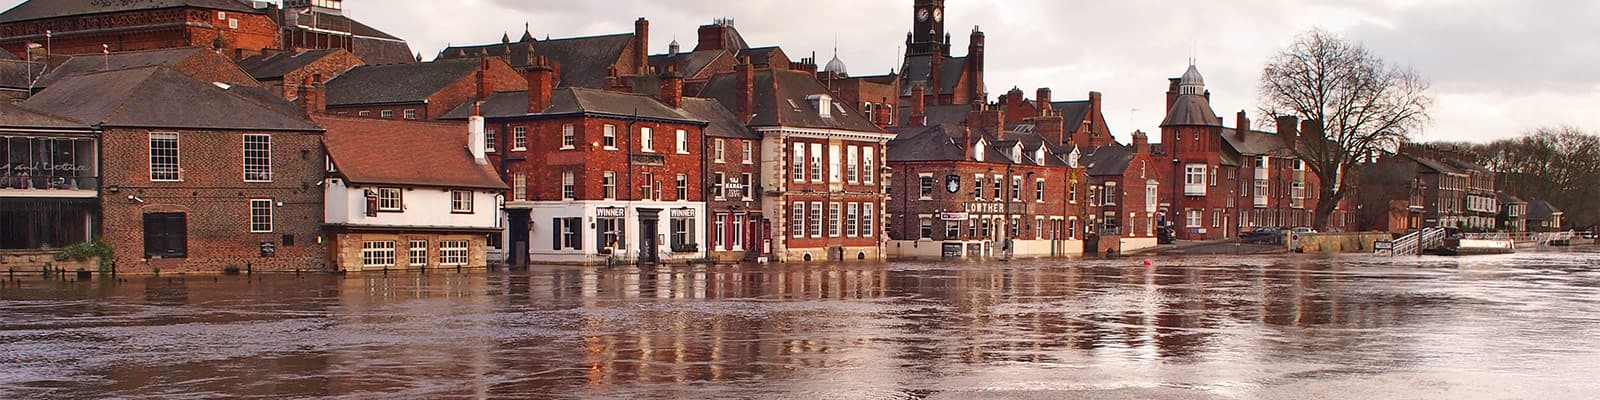 Flooding in York in 2015